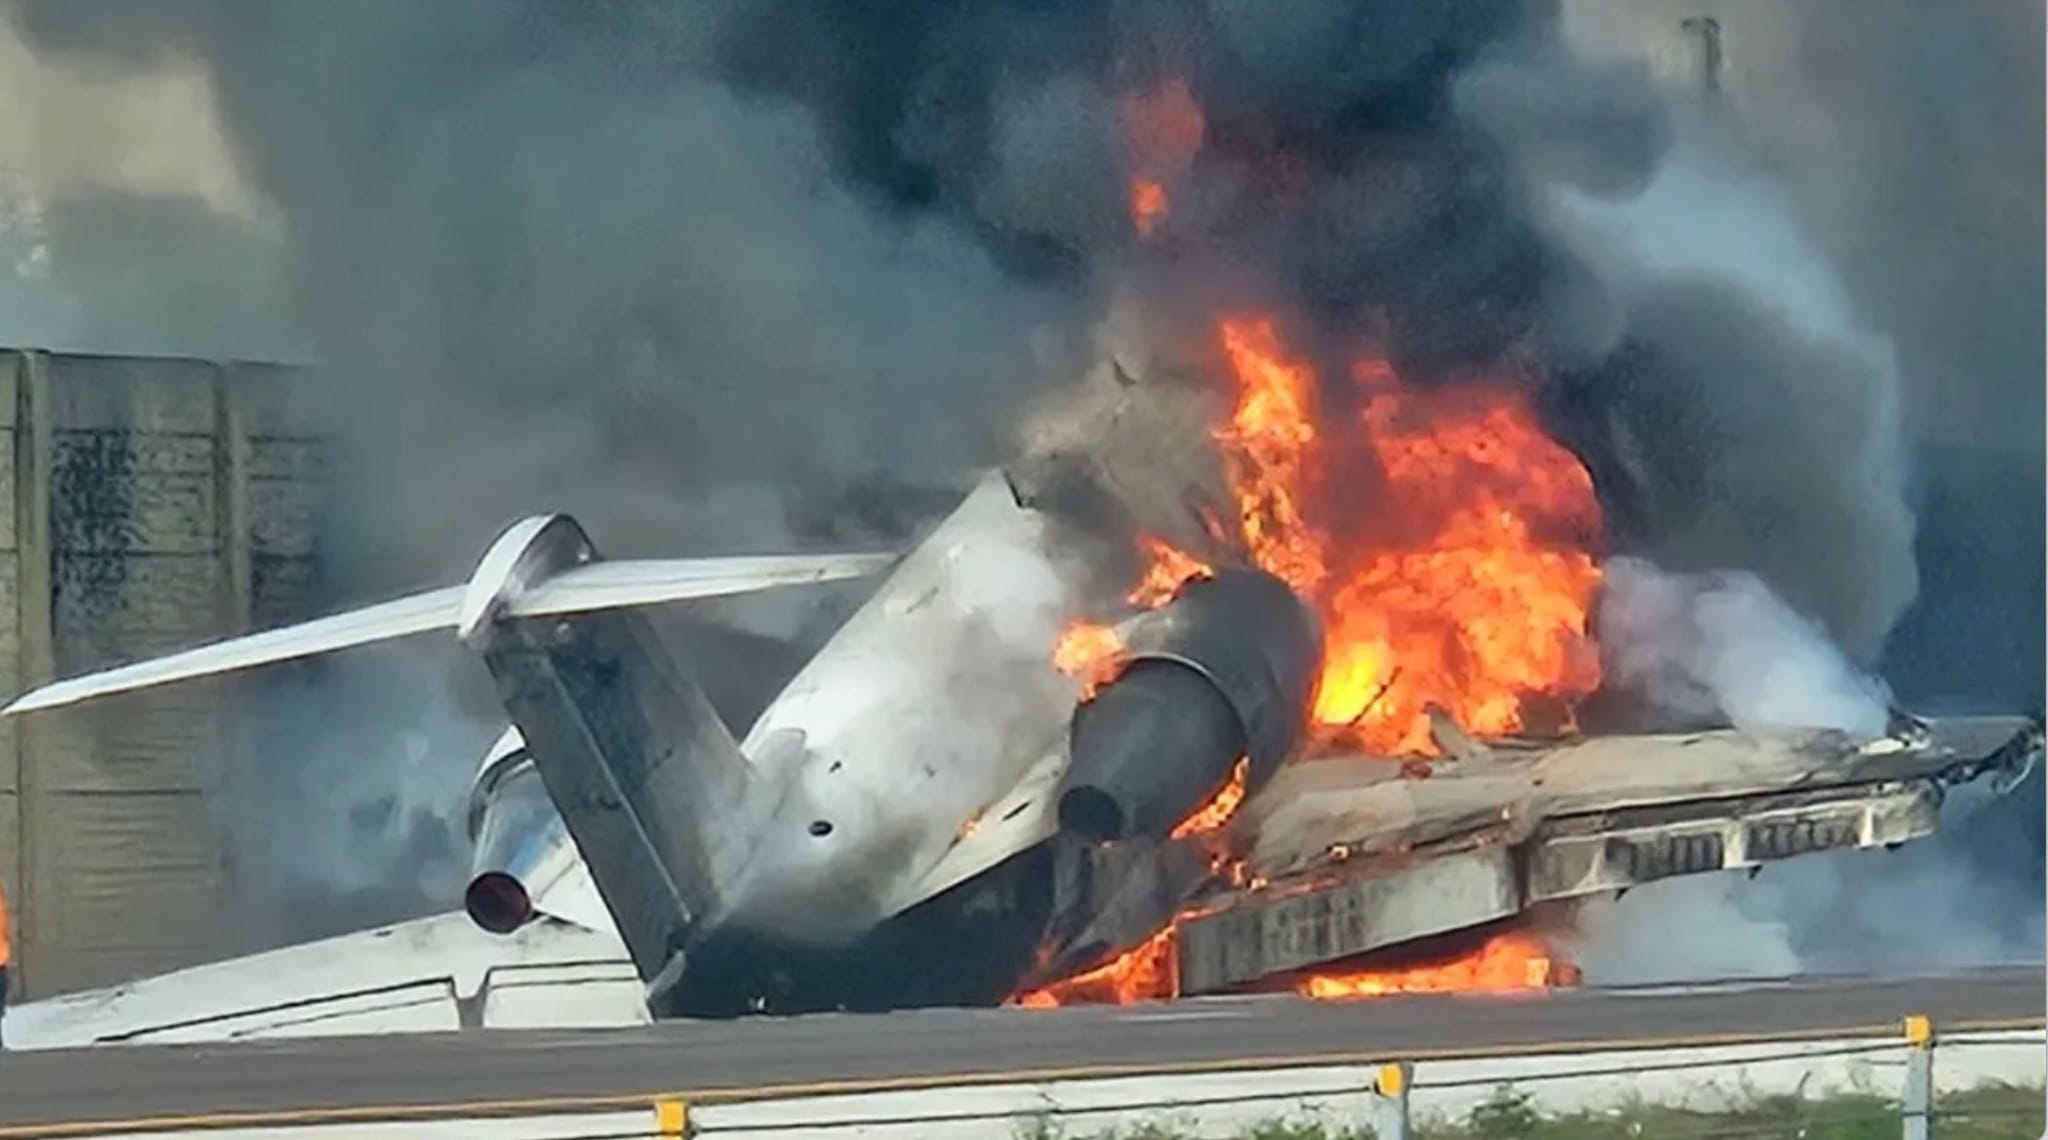 Florida Plane Crash in Highway - Aviation in Nepal (Internet Photo)